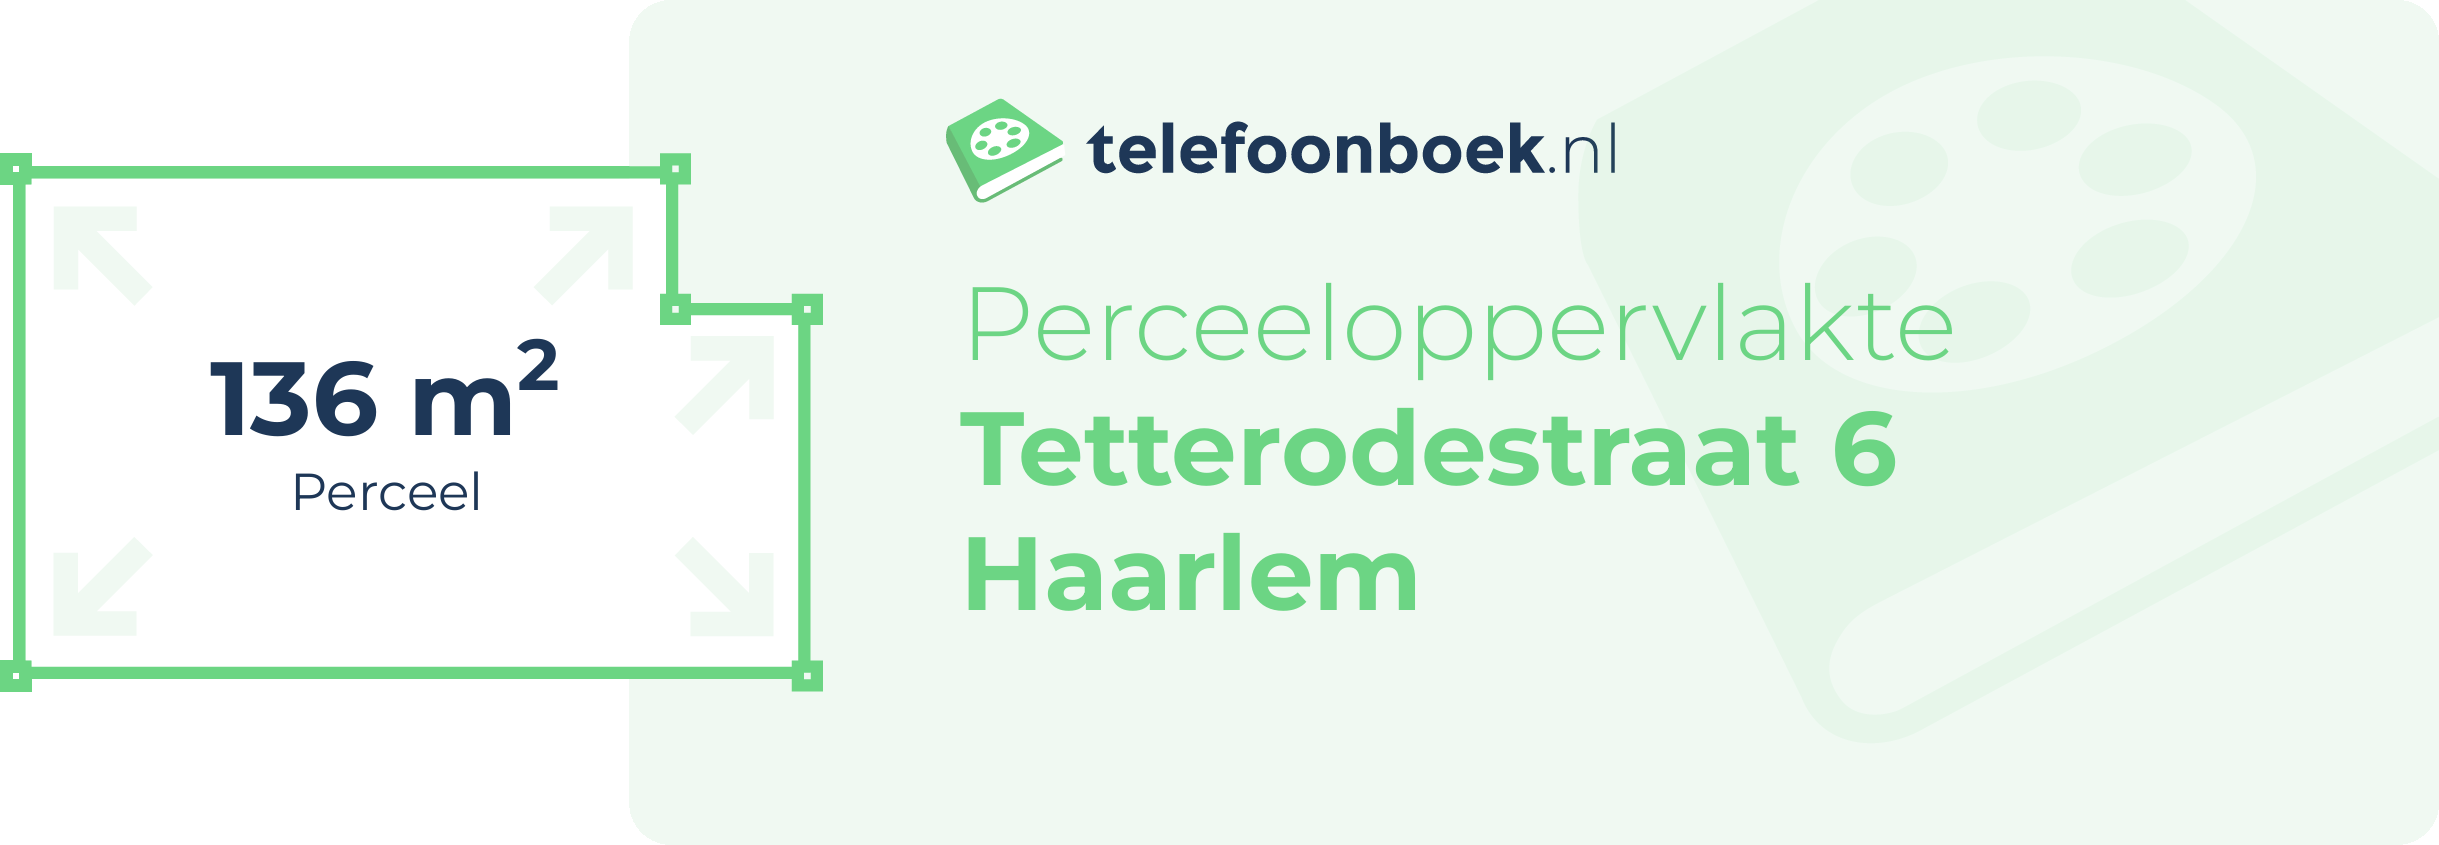 Perceeloppervlakte Tetterodestraat 6 Haarlem